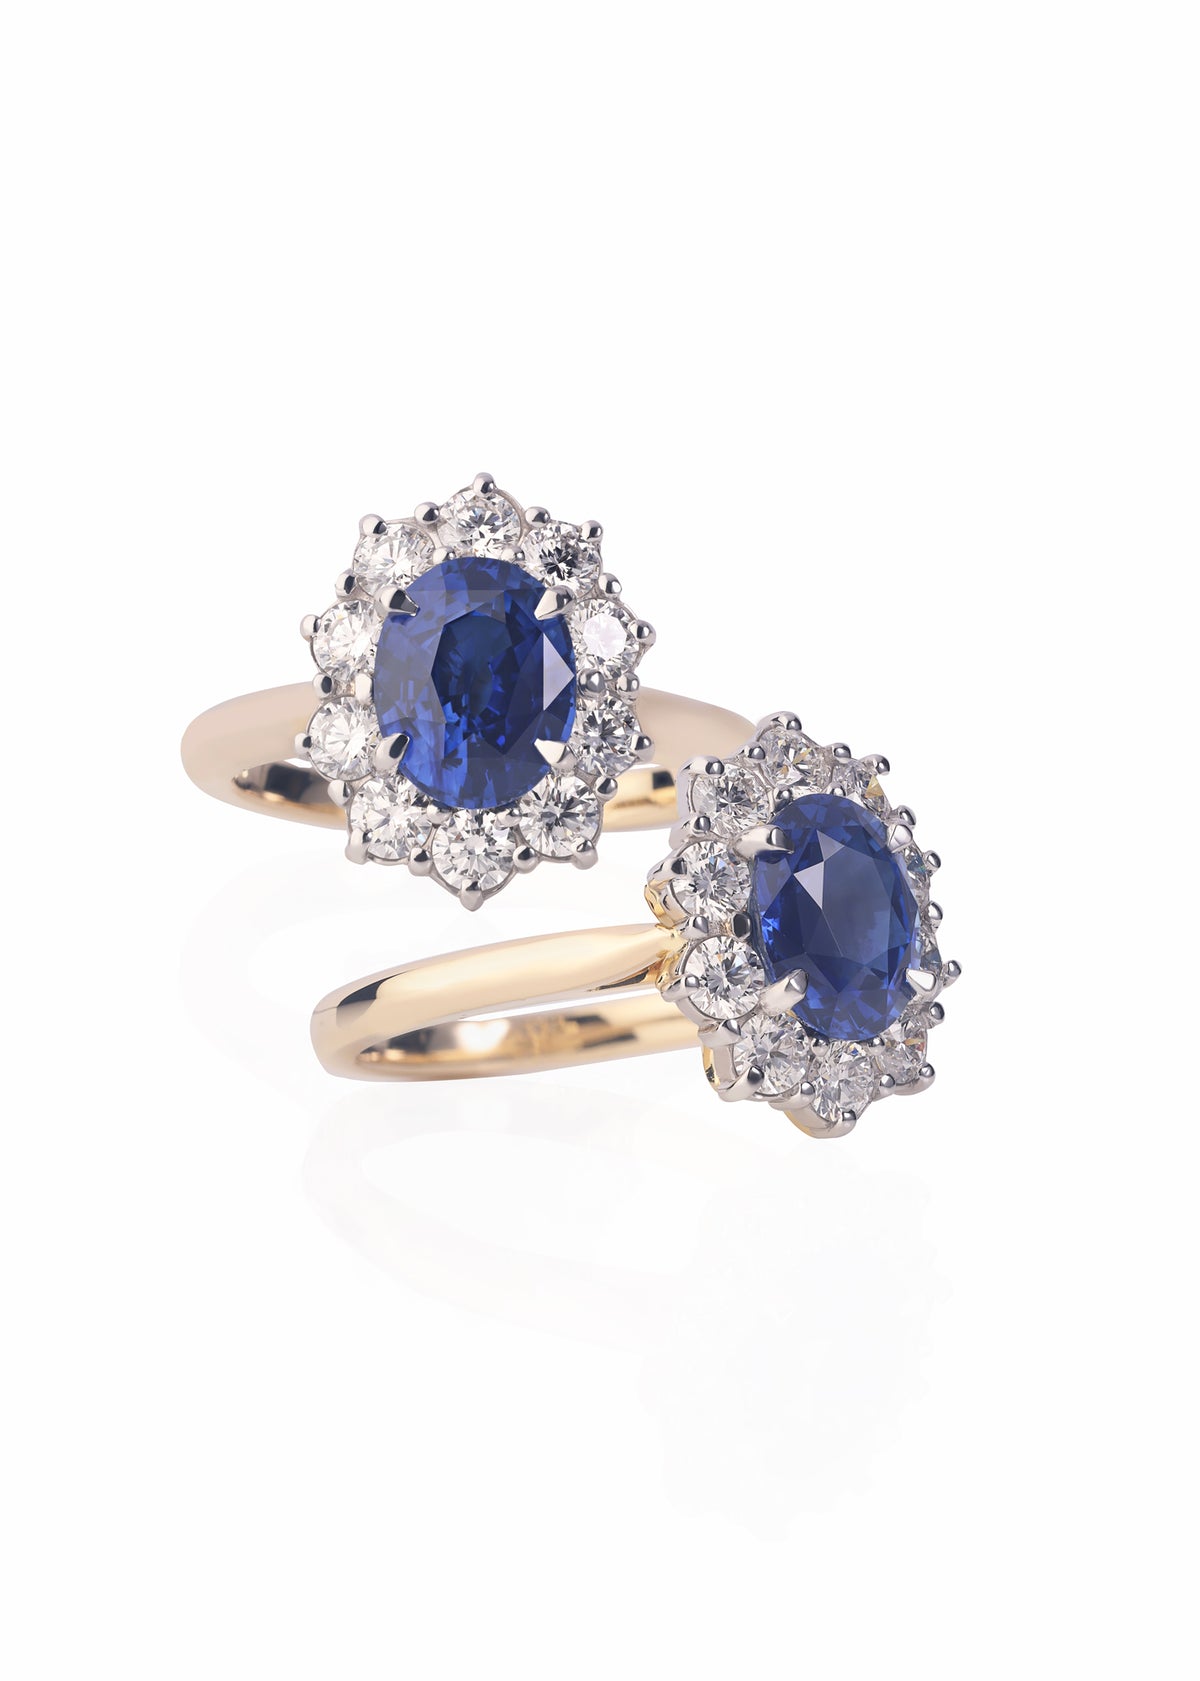 Custom 2.31ct Oval cut Blue Ceylon-type Sapphire and Diamond halo ring